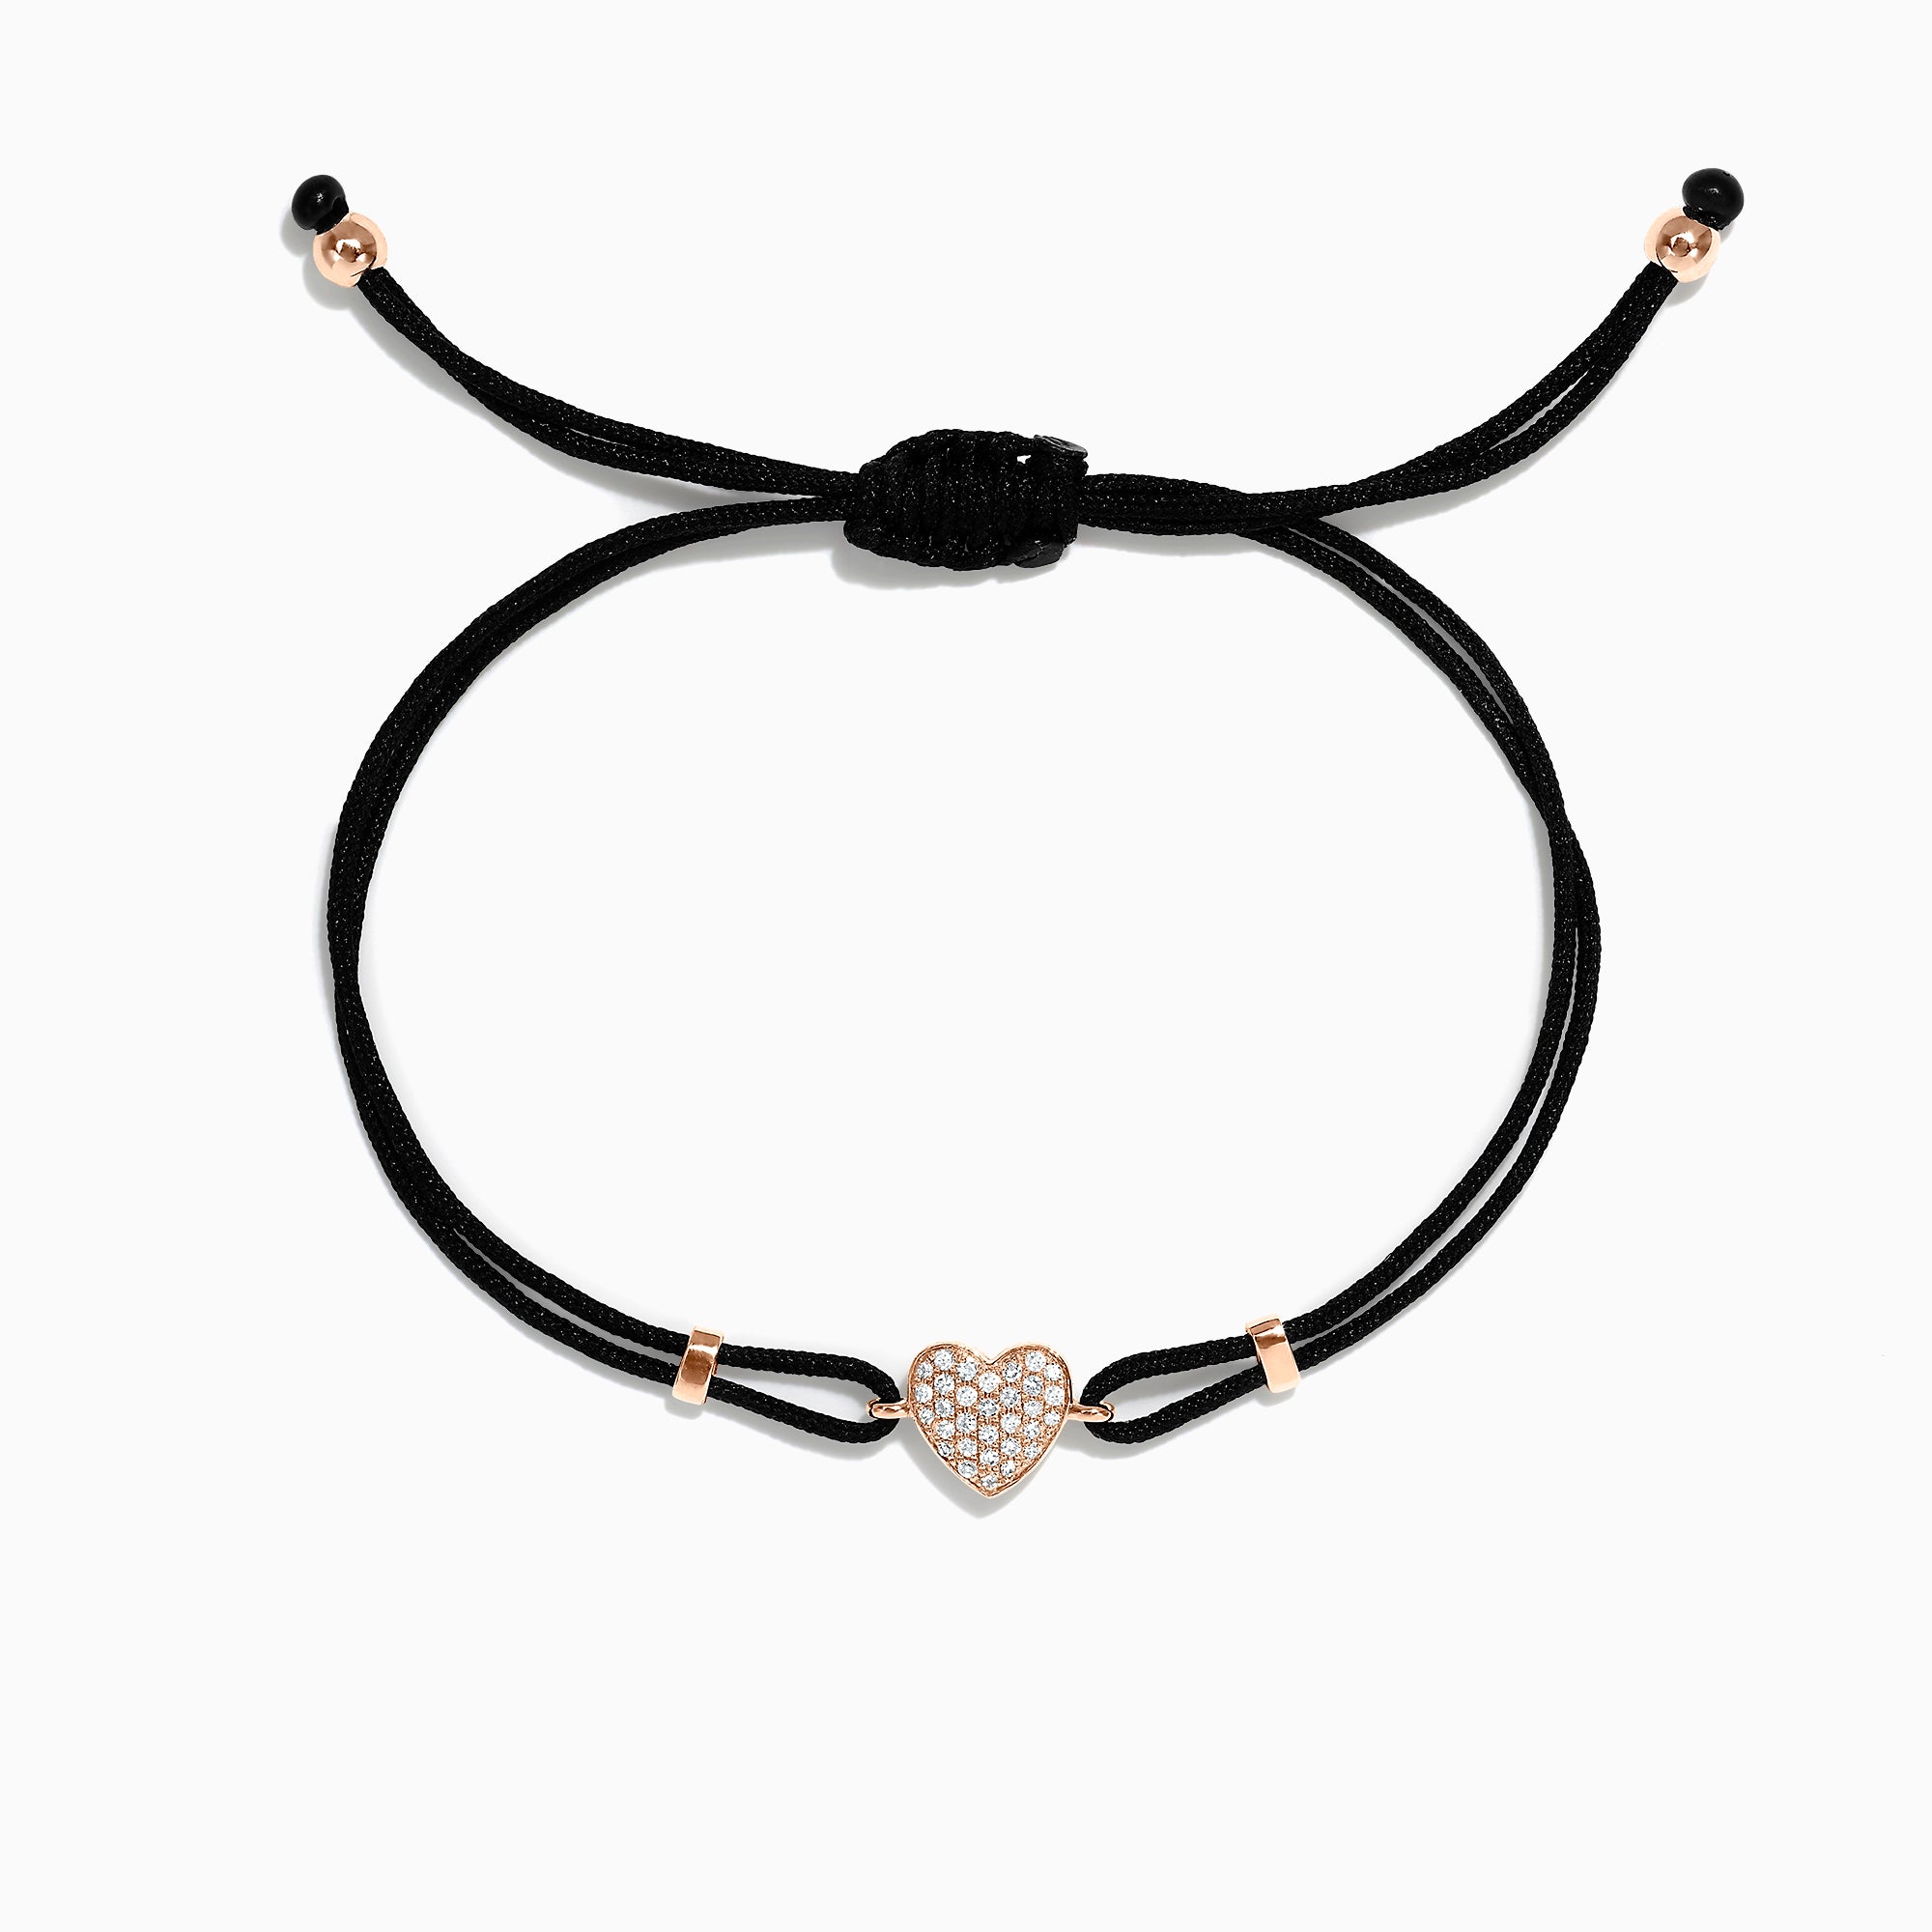 Buy Heart Friendship Bracelets, Friendship Bracelet Set, Set of 5 Friendship  Bracelets, Heart Bracelet, Party Bag Gift, Girls Gift, Silver Heart Online  in India - Etsy